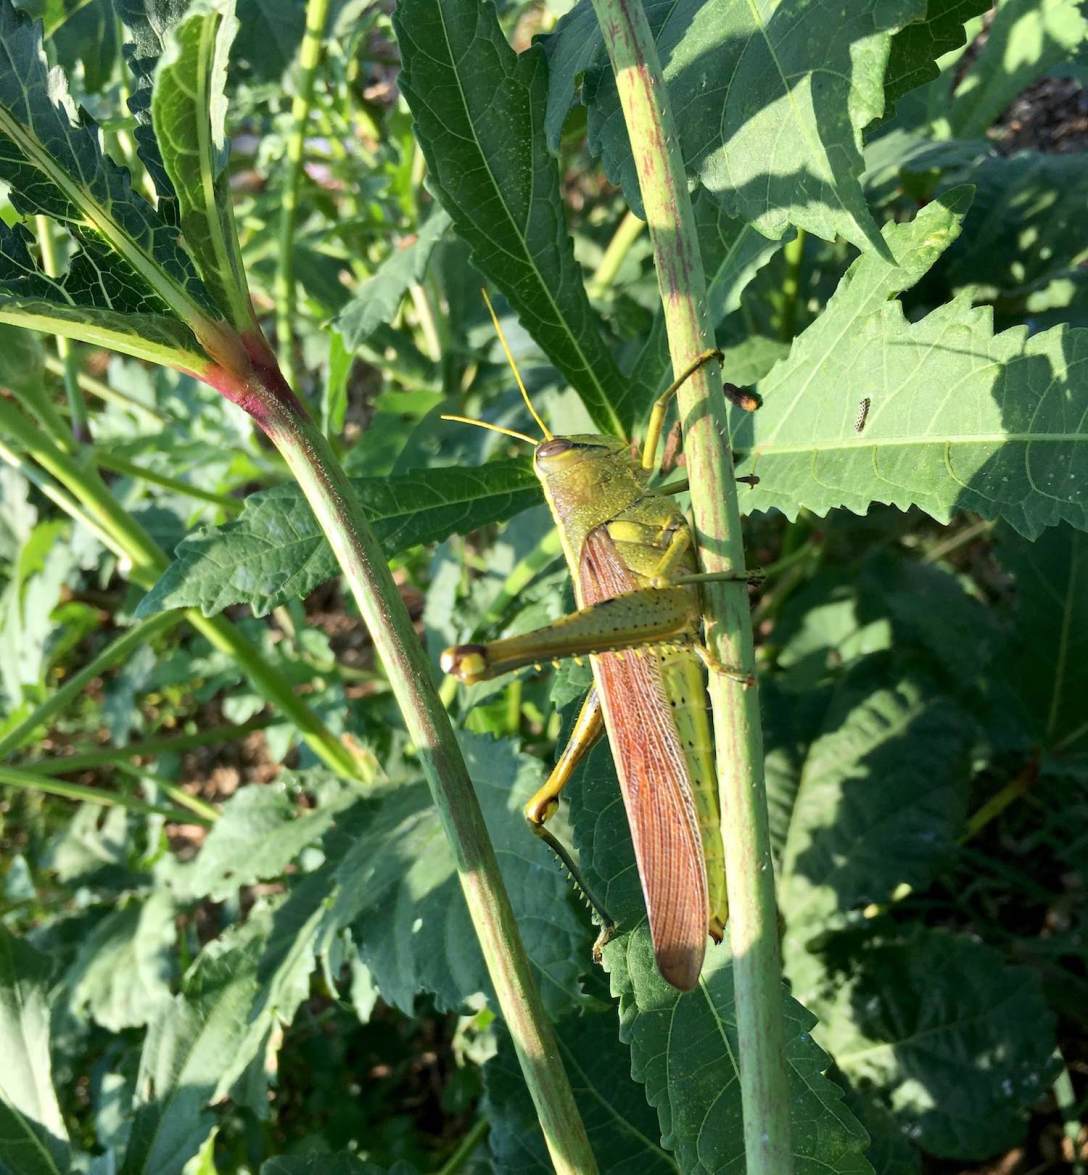 Giant grasshopper on an okra plant